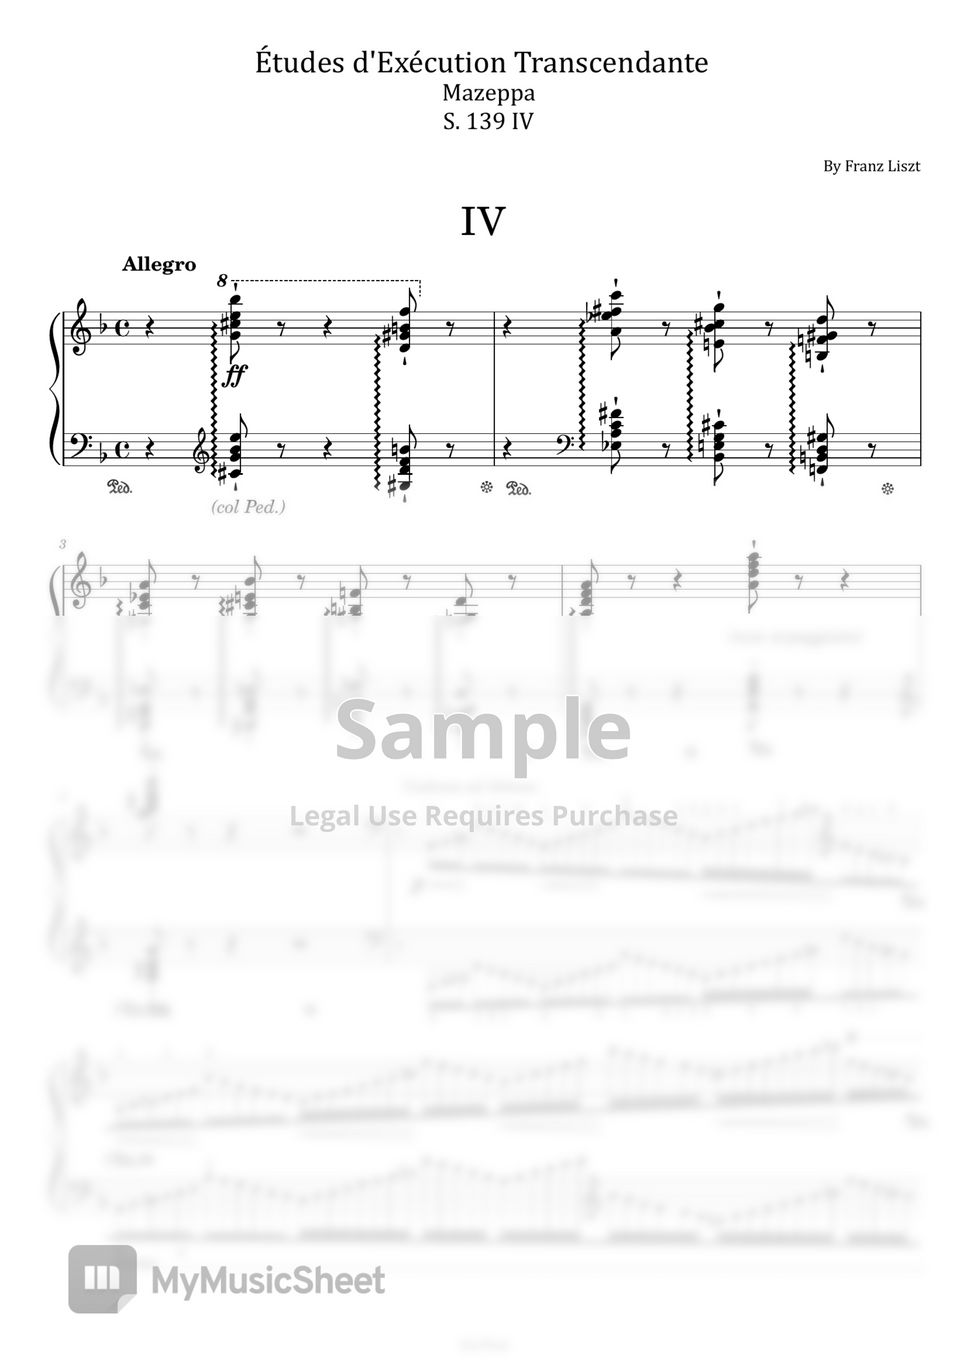 Franz Liszt - Mazeppa S. 139 No.4 - Études d'Exécution Transcendante (Original With Fingered - For Piano Solo) by poon